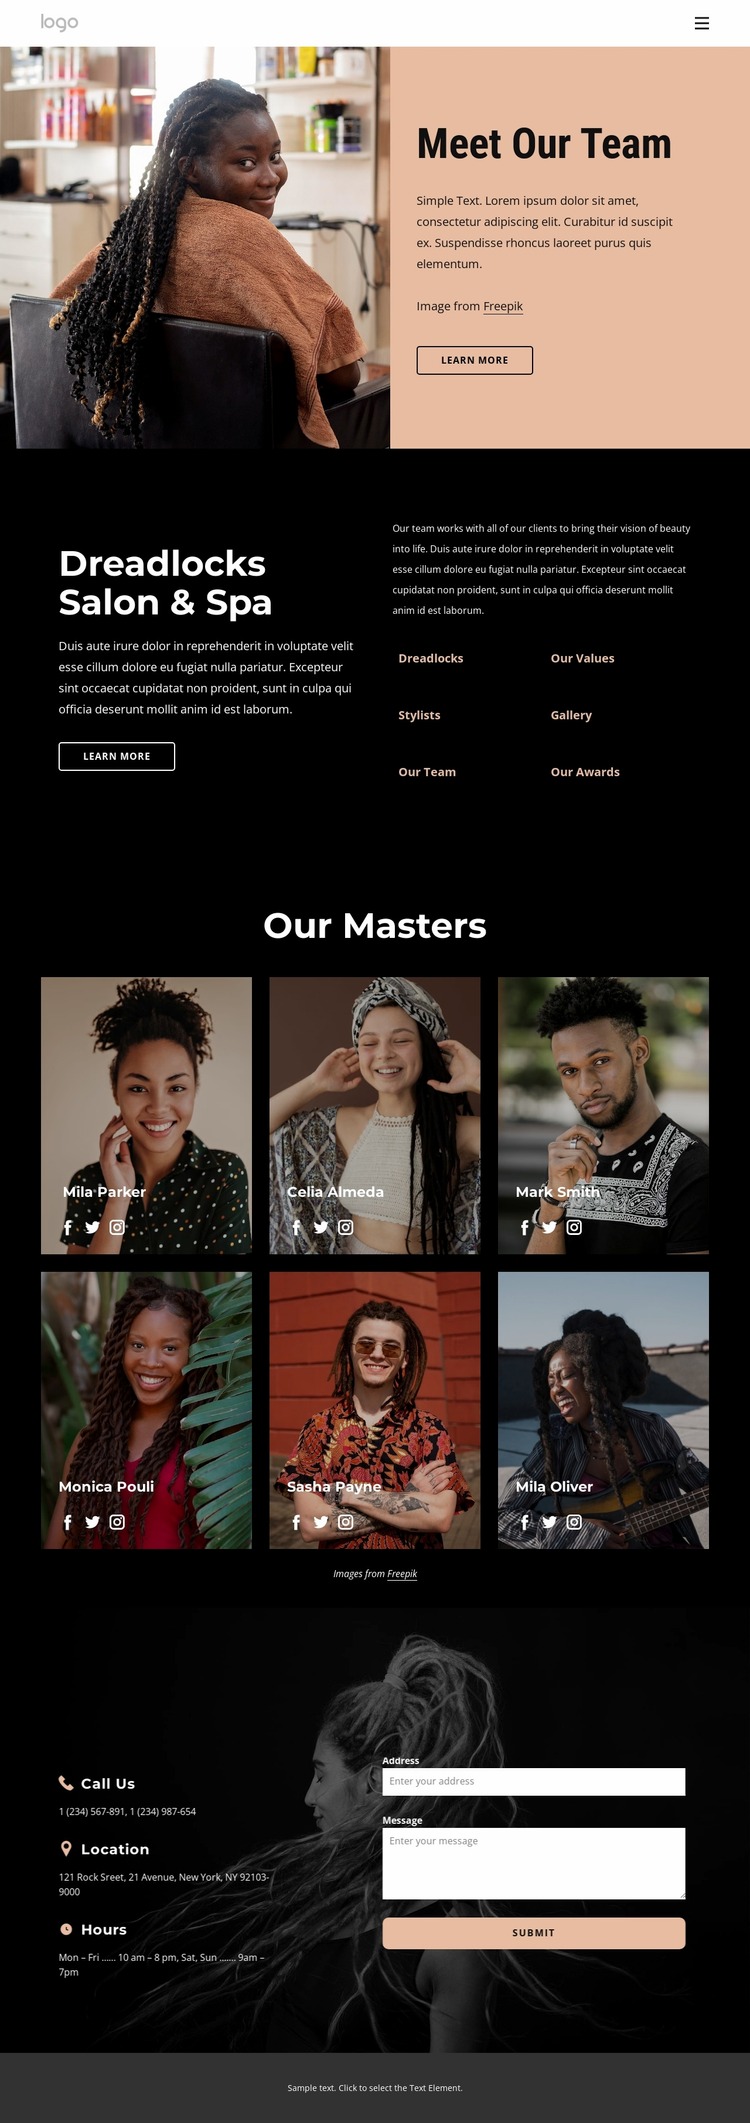 Meet our masters Website Mockup